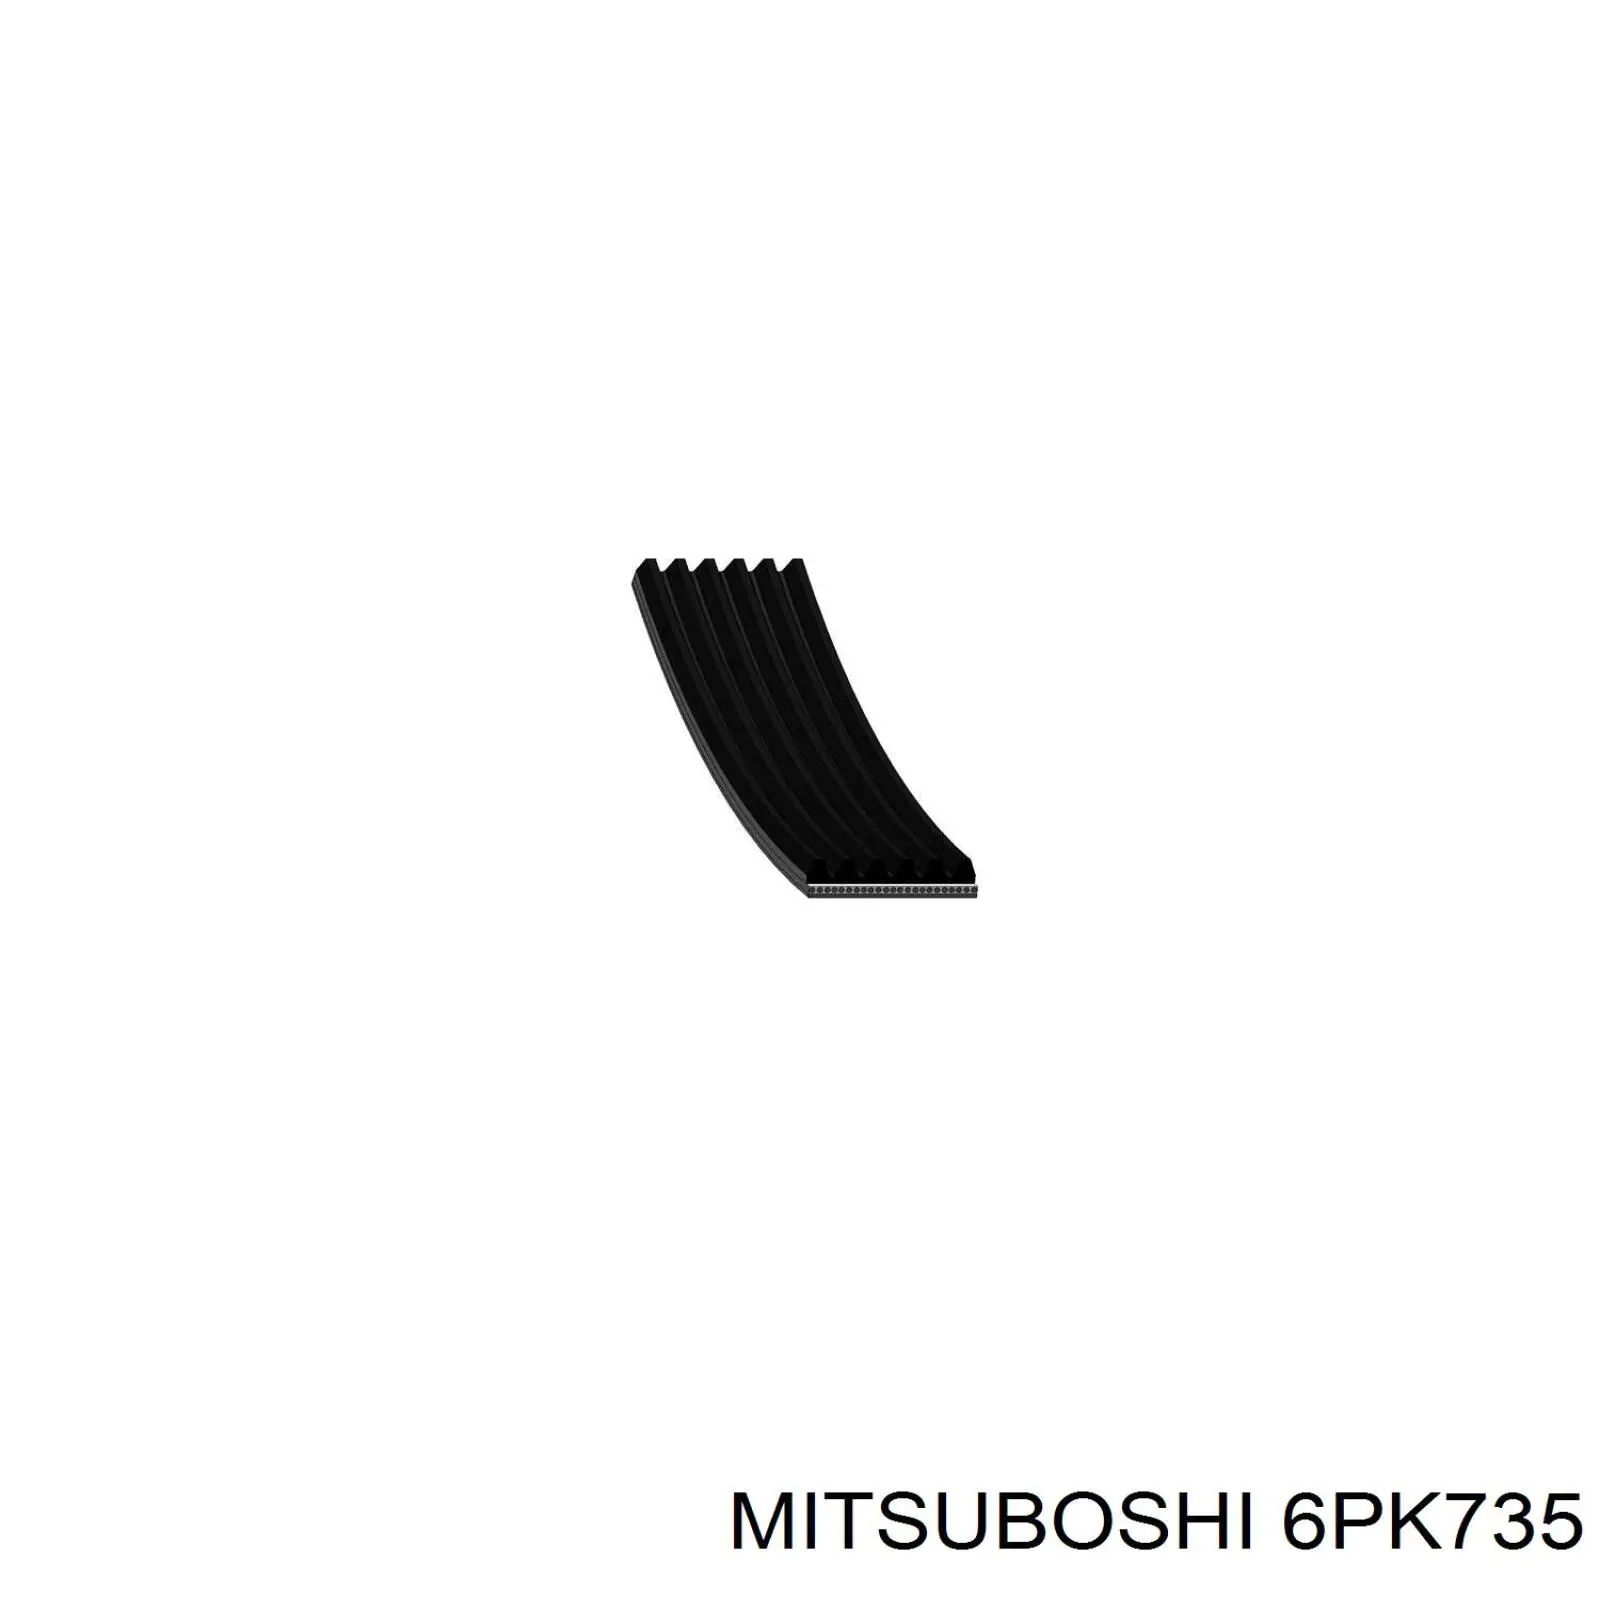 6PK735 Mitsuboshi ремень генератора